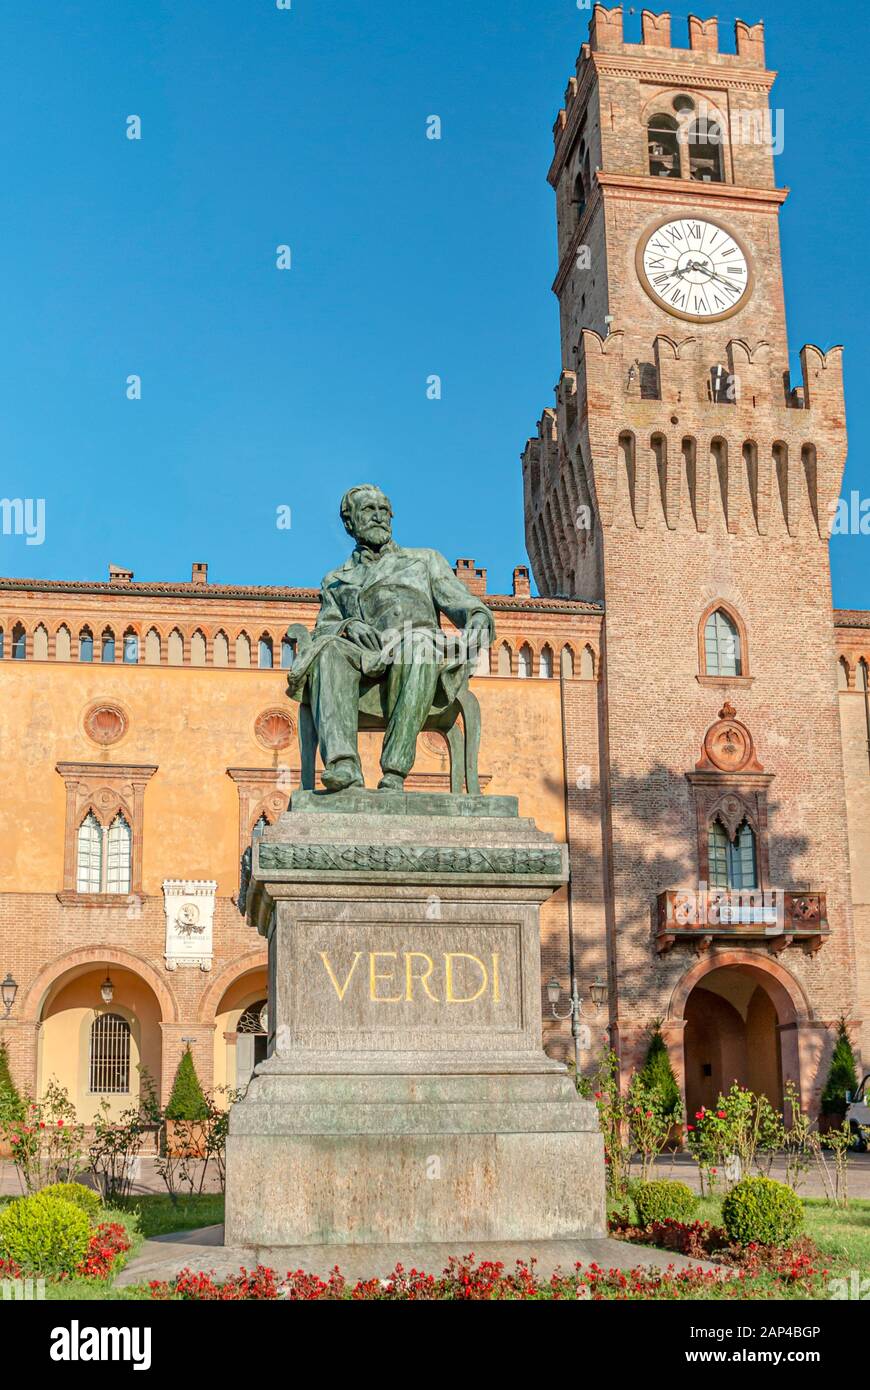 Verdi Monument in front of the Rocca of Busseto, Emilia-Romagna, Italy Stock Photo